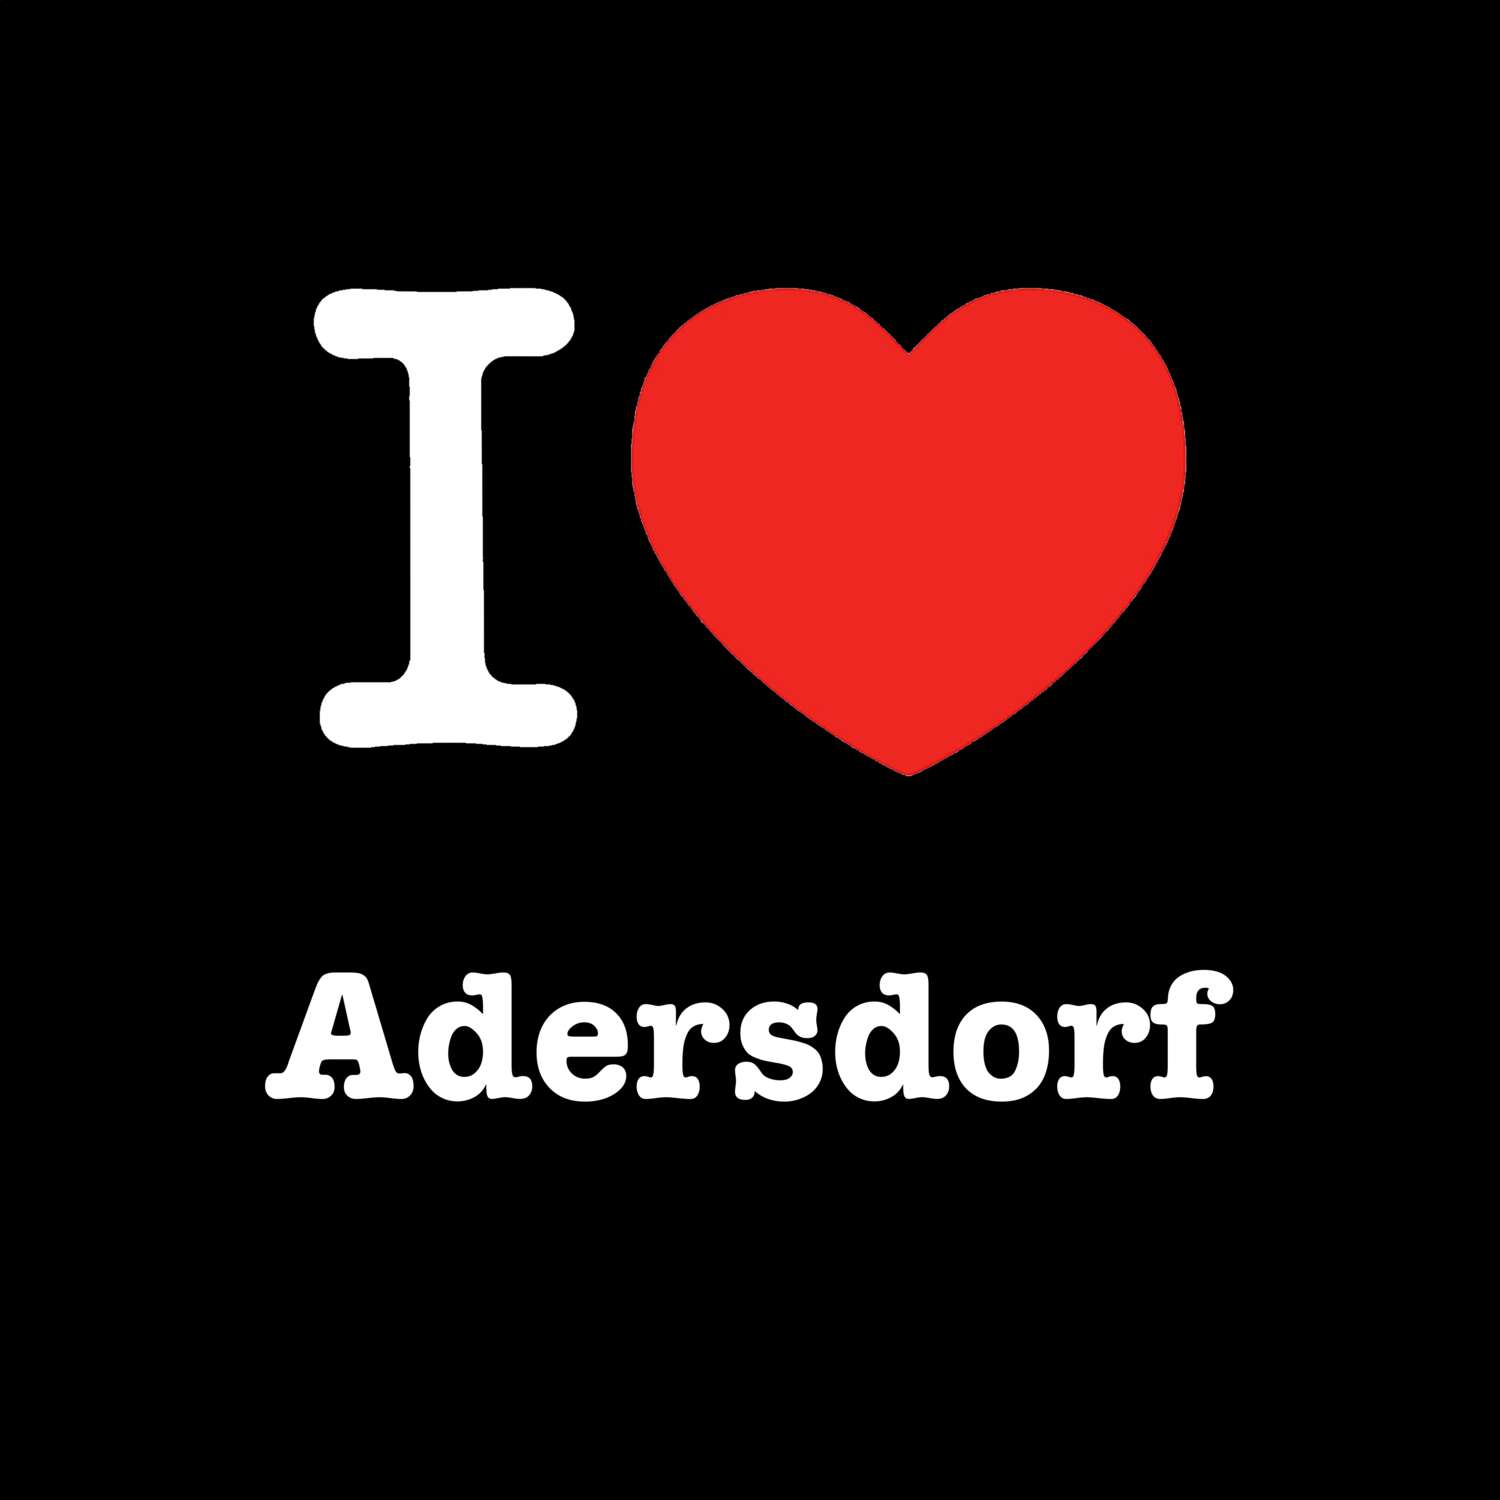 Adersdorf T-Shirt »I love«